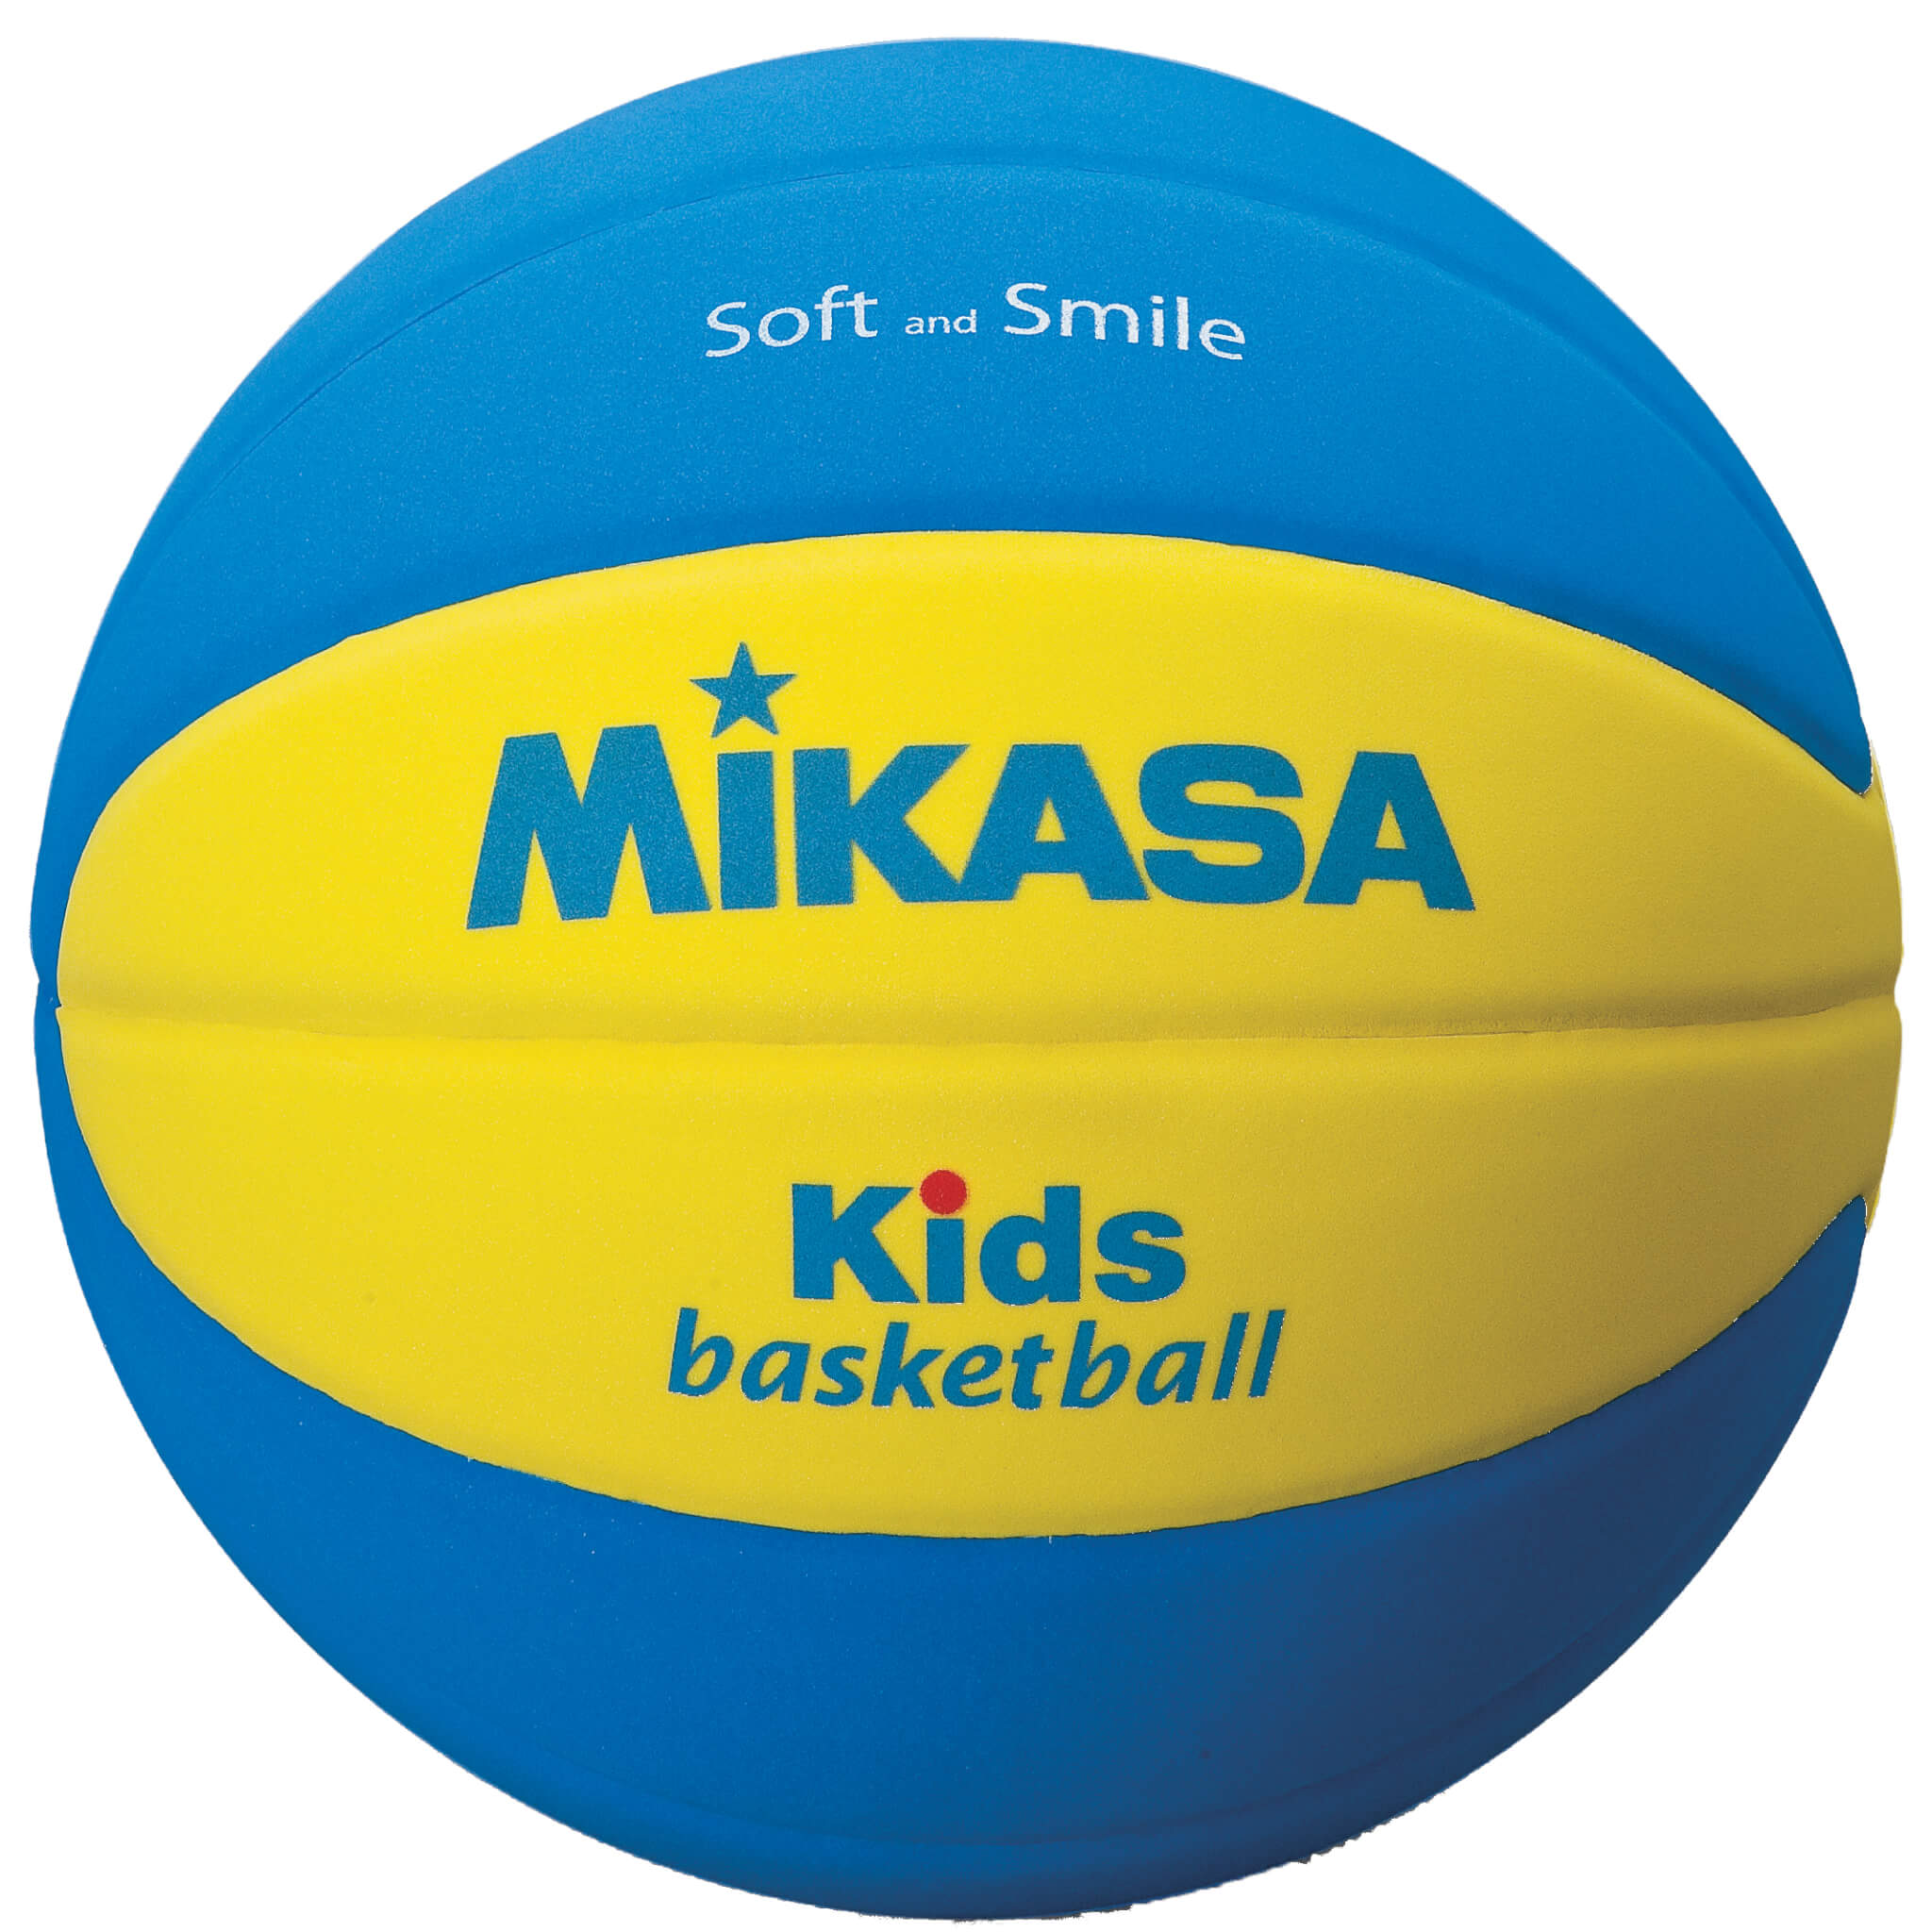 Mikasa Kids basketboll